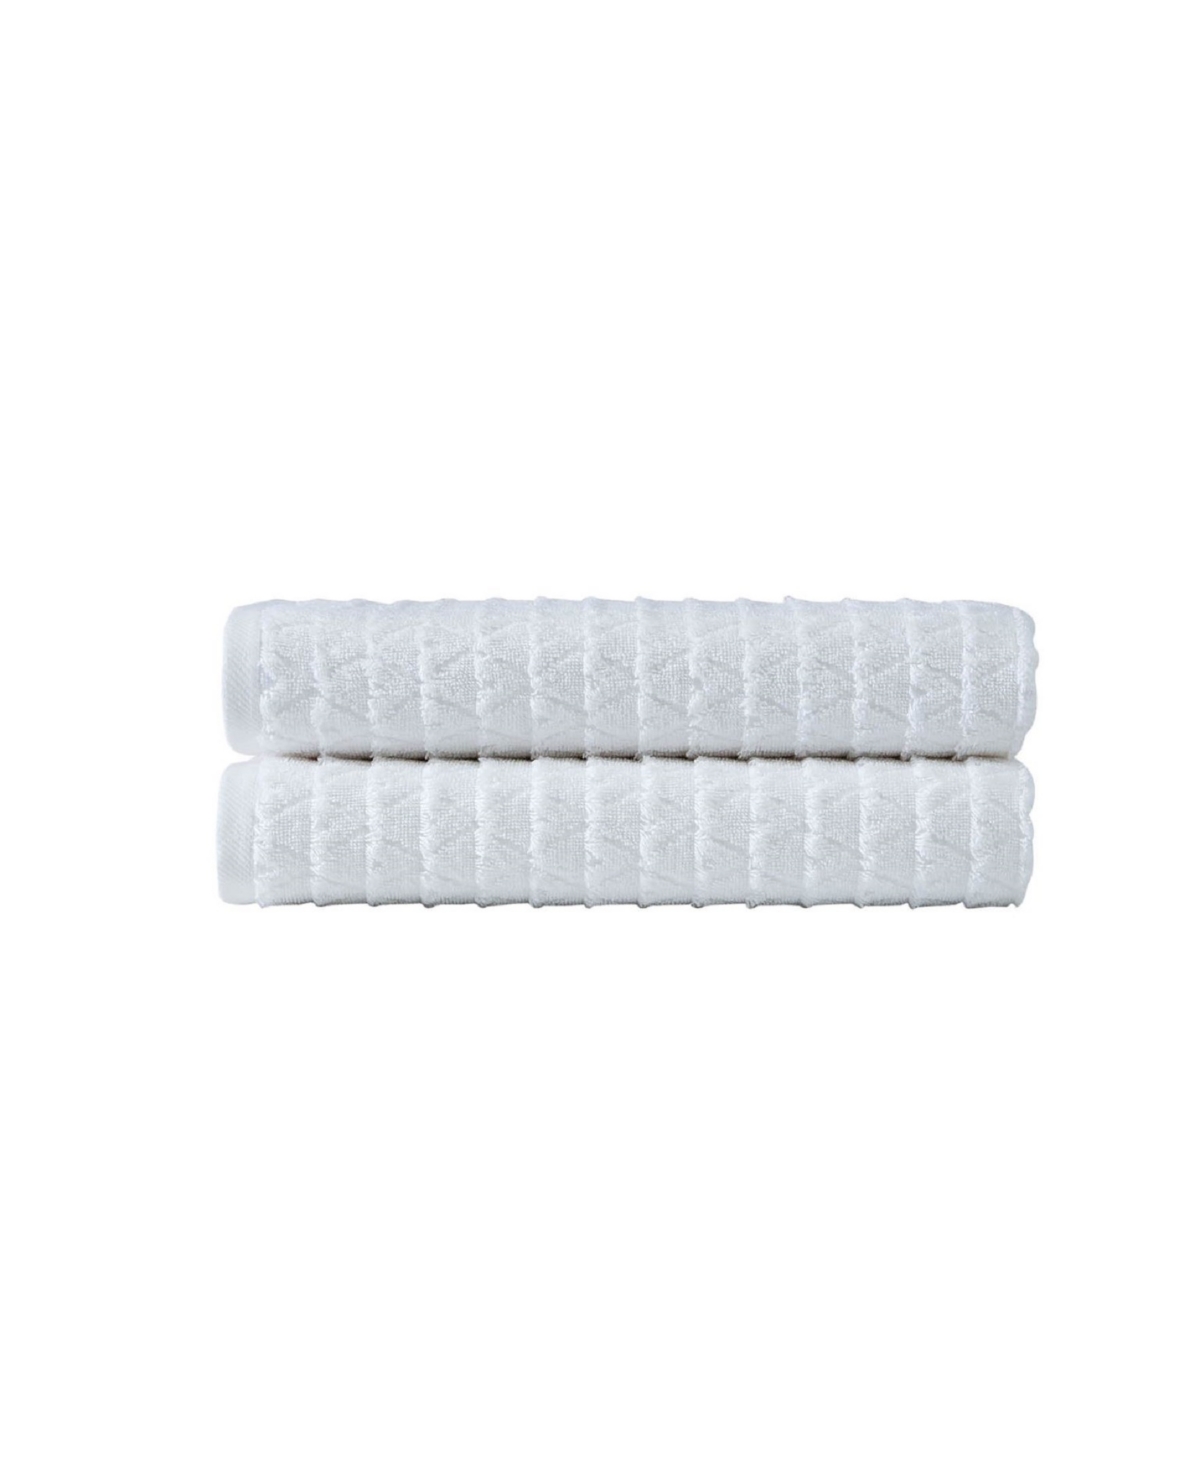 Ozan Premium Home Azure Collection 2 Piece Turkish Cotton Luxury Bath Towel Set Bedding In White